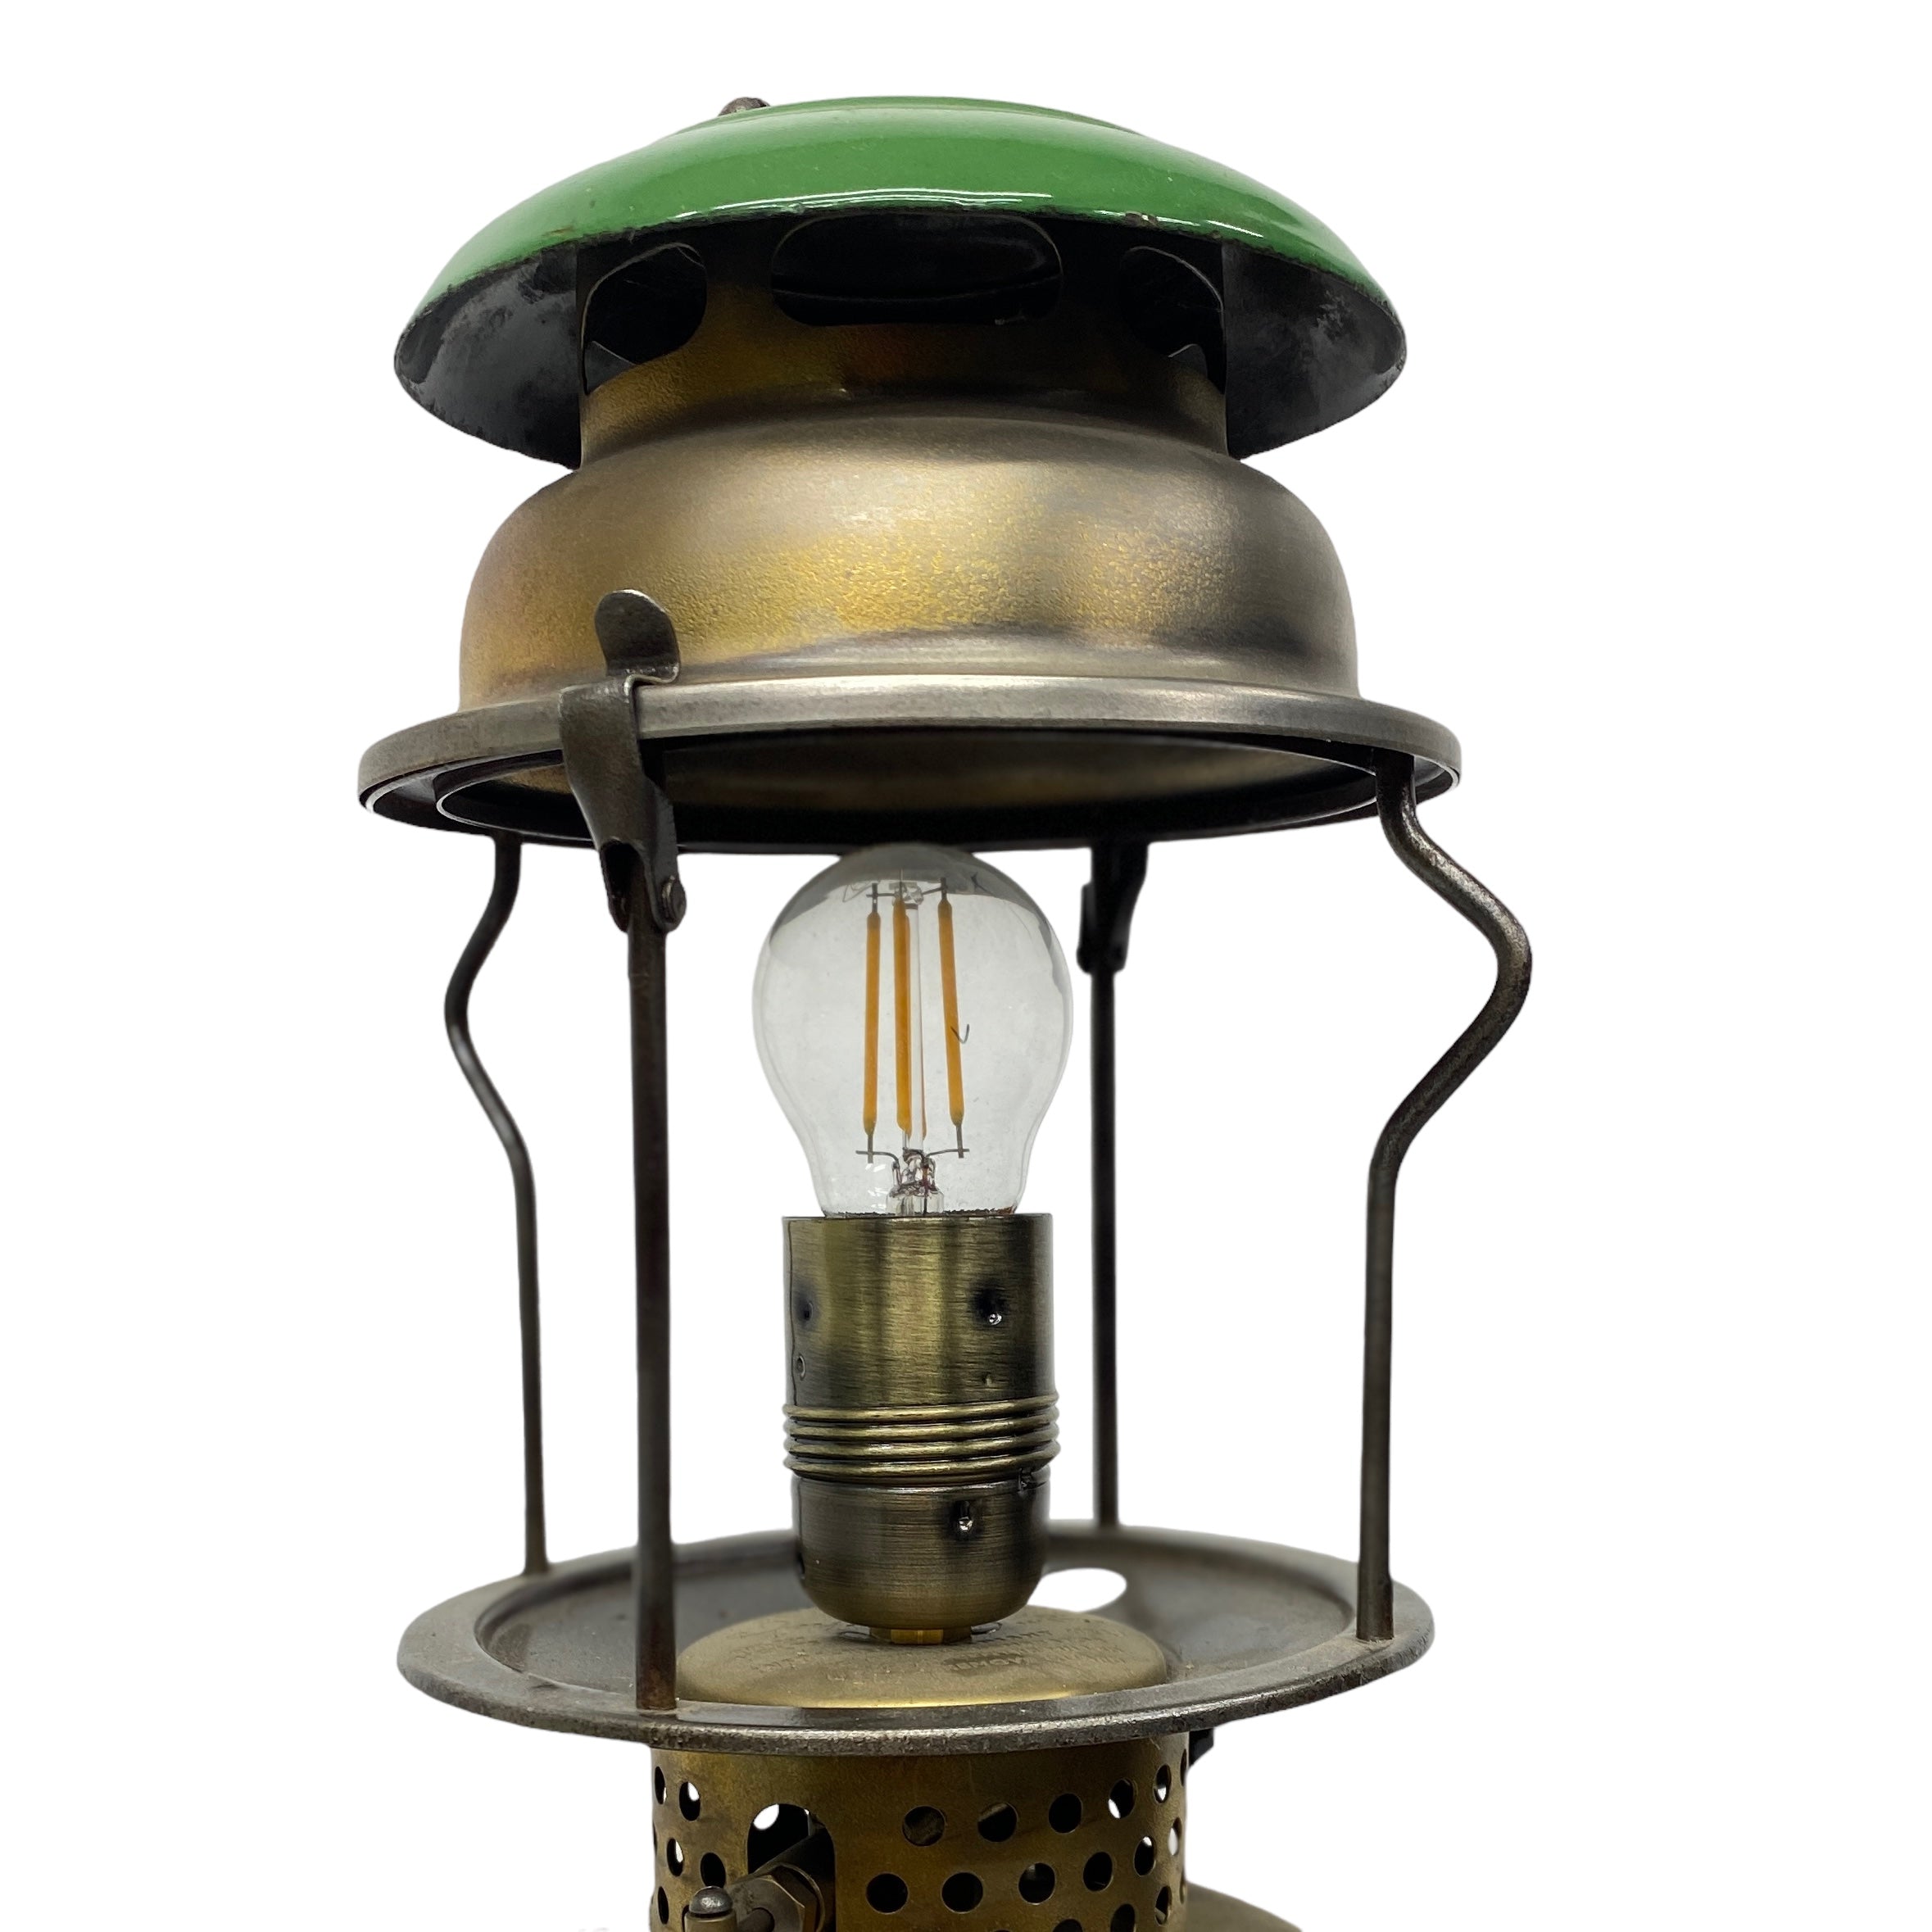 Green Enamel Vintage Veritas Paraffin Converted Lamp Pifco